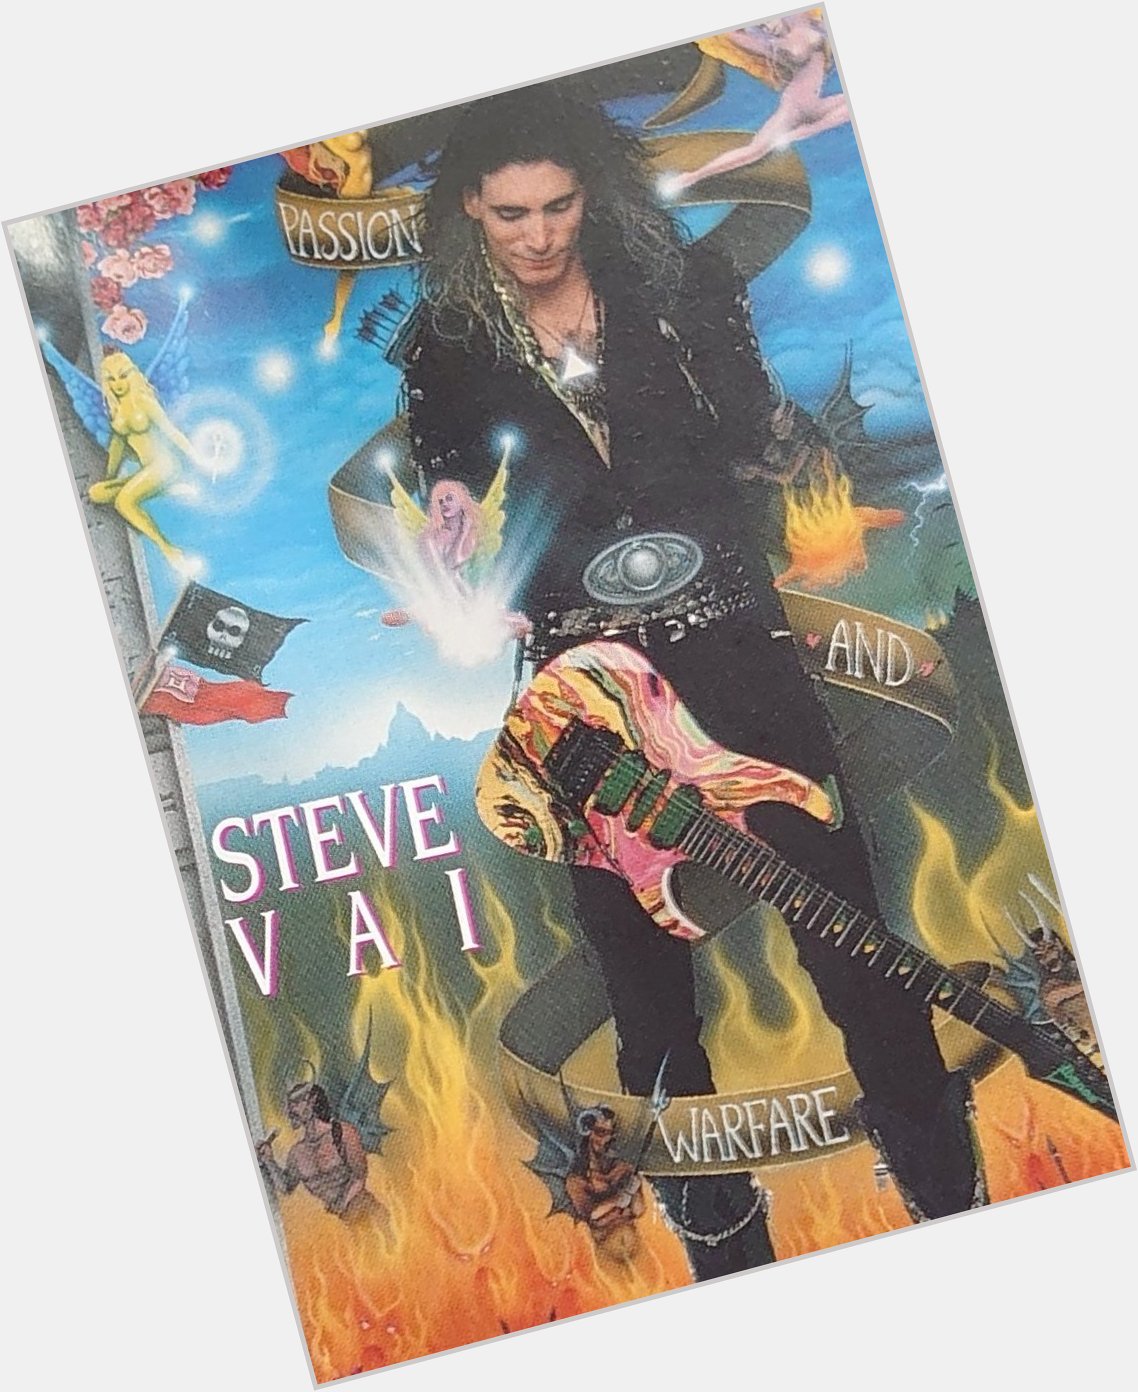 Happy birthday Steve Vai! 